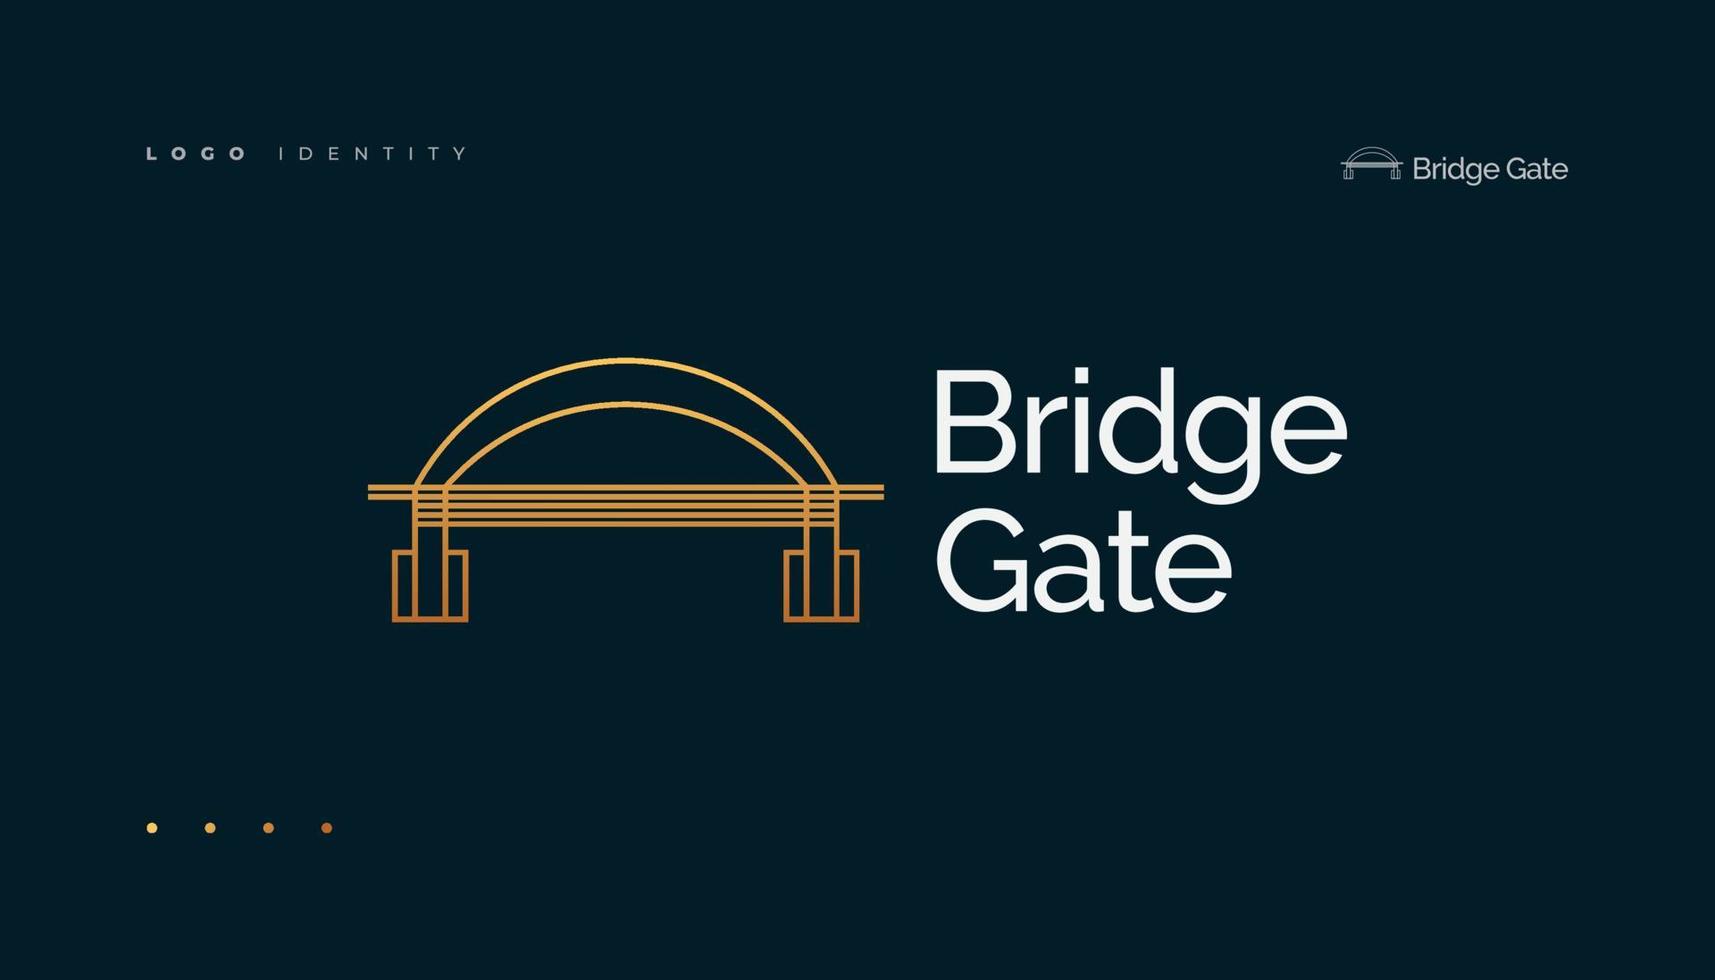 Bridge logo vector icon illustration